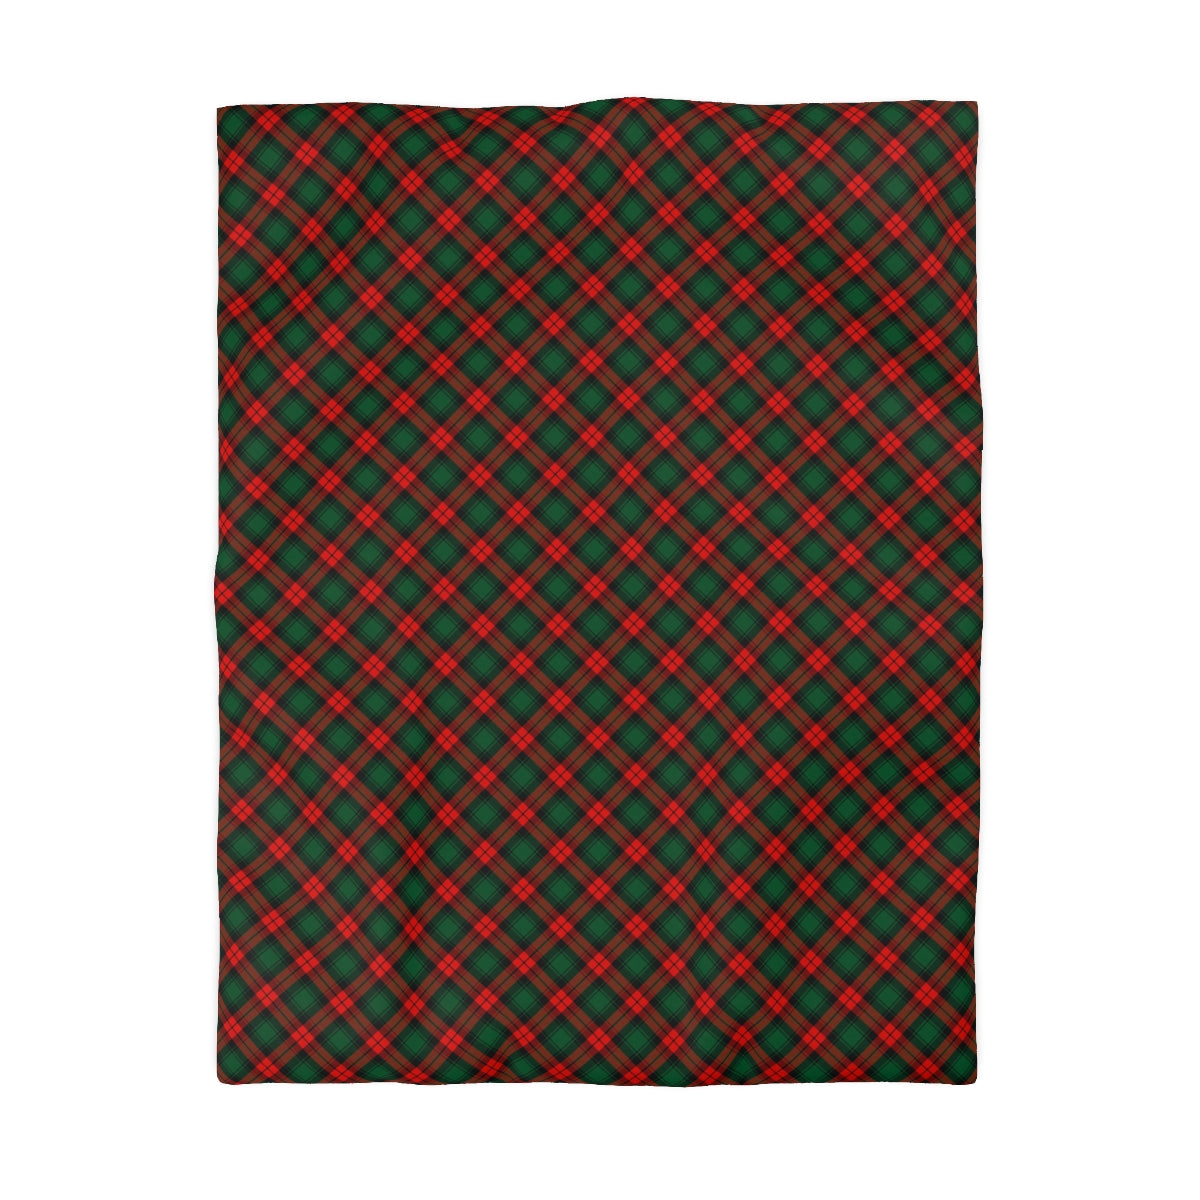 Red and Green Tartan Plaid Microfiber Duvet Cover